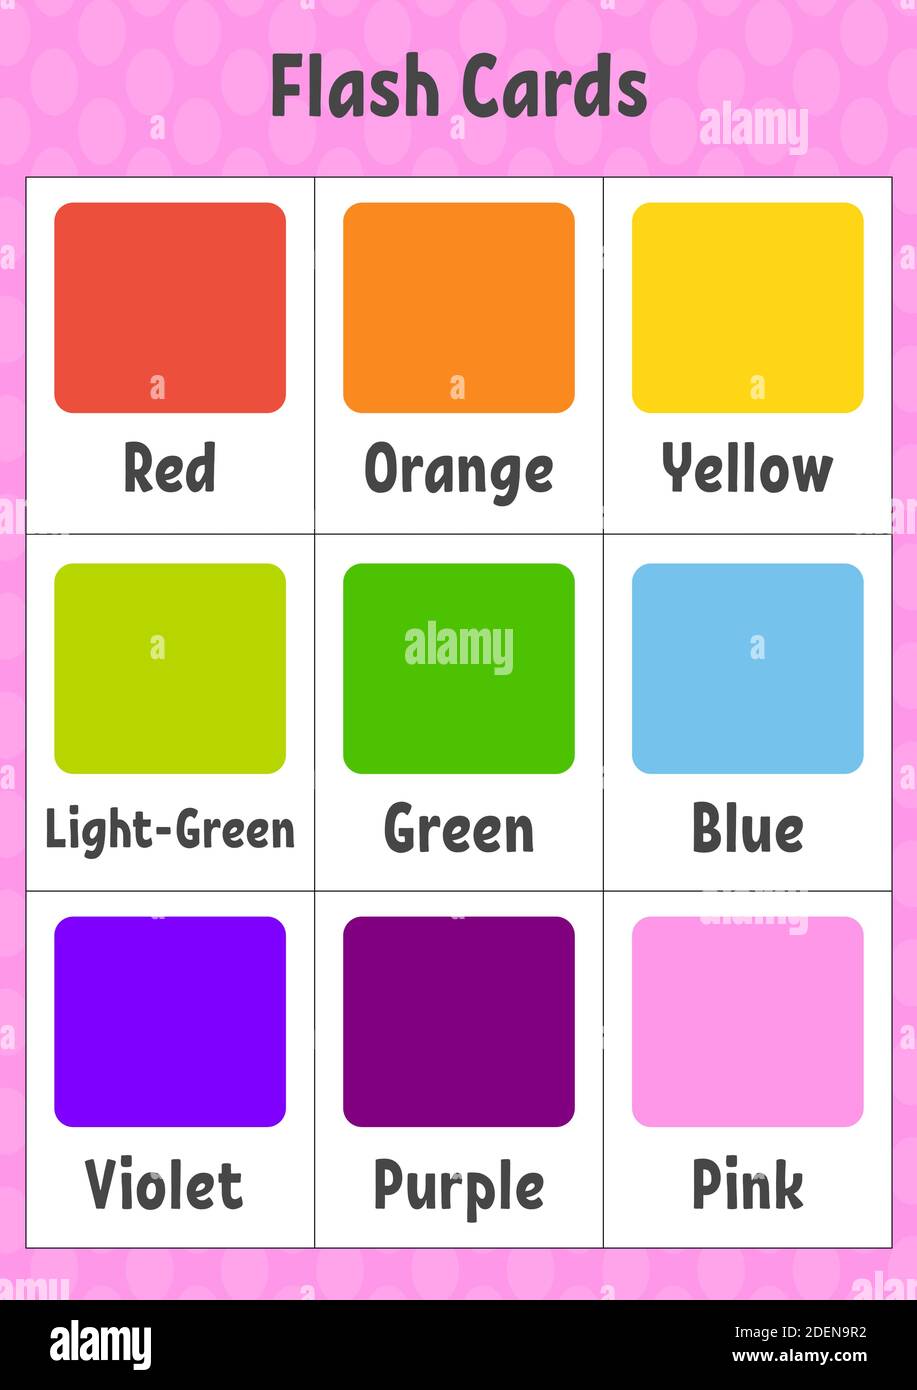 https://c8.alamy.com/comp/2DEN9R2/flash-cards-learning-colors-education-developing-worksheet-activity-page-for-kids-color-game-for-children-vector-illustration-2DEN9R2.jpg